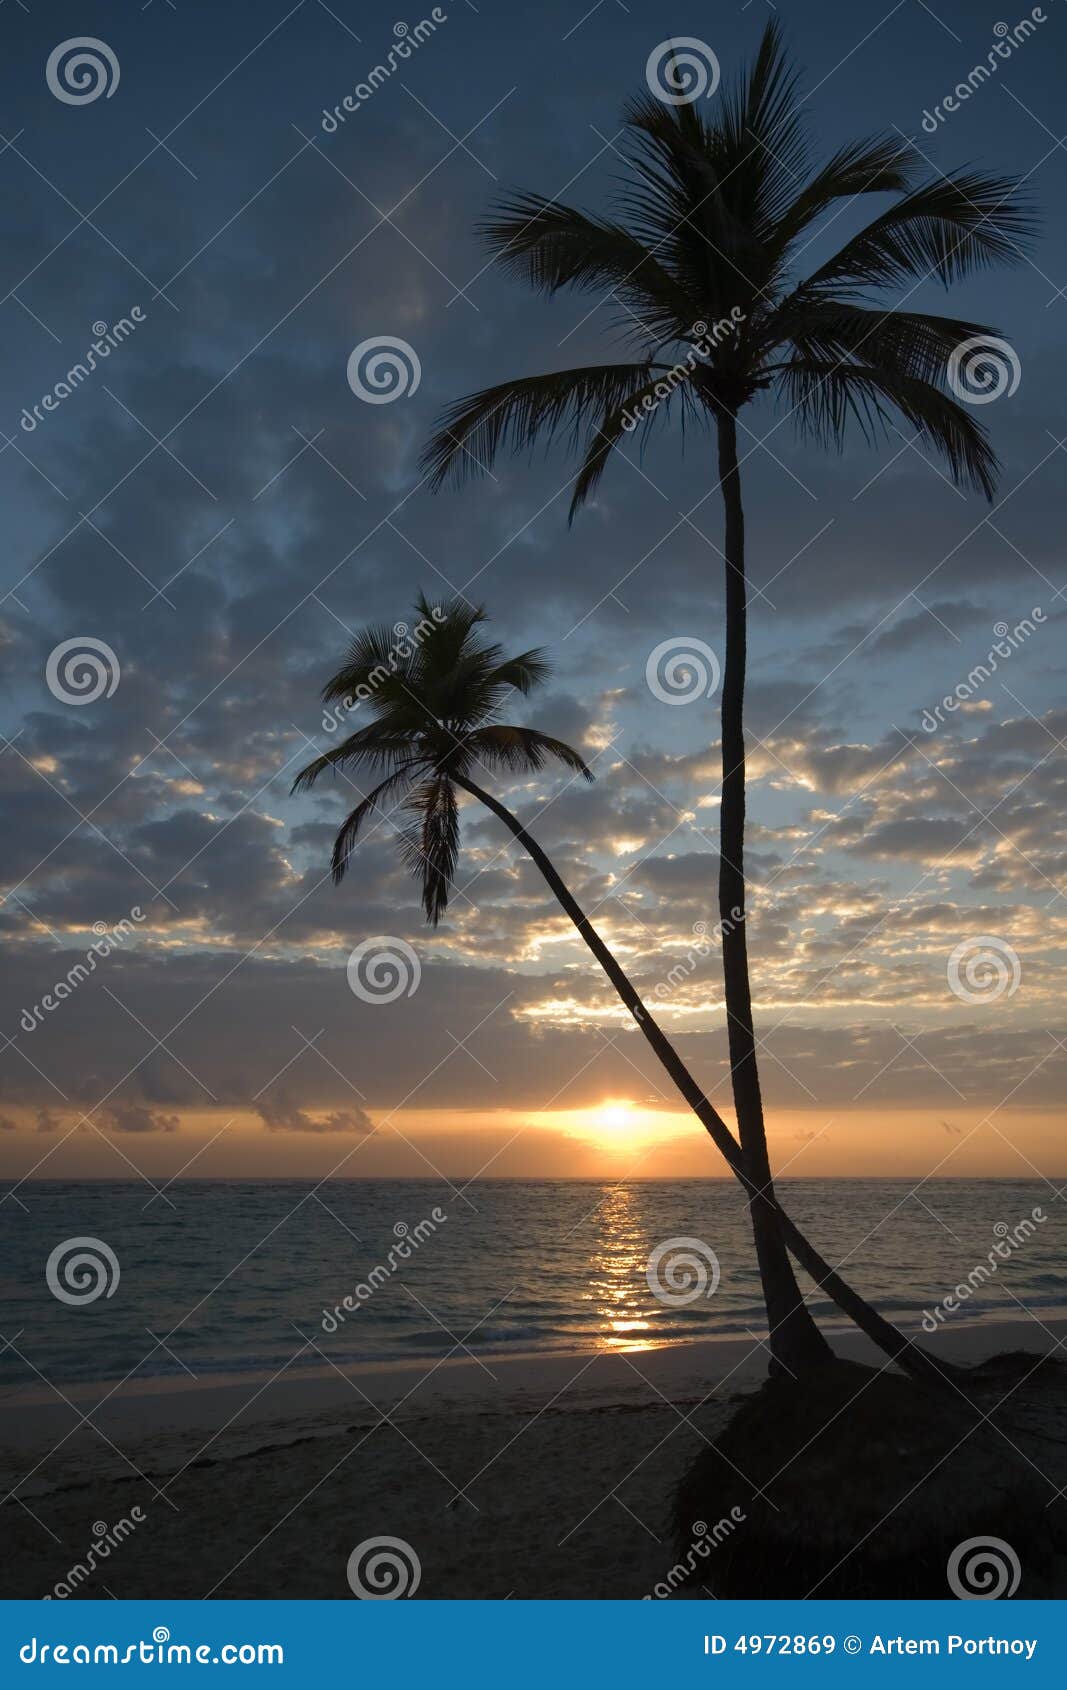 Two Palm Trees Beach Sunrise Stock Image Image Of Destination